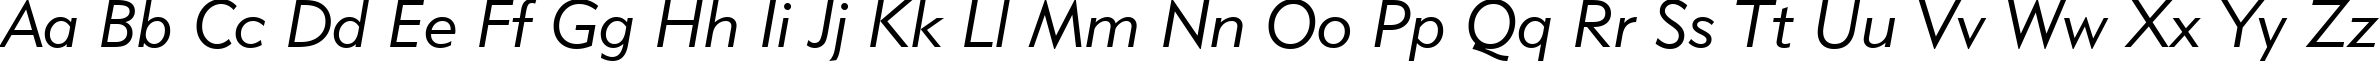 Пример написания английского алфавита шрифтом Geometric 415 Lite Italic BT